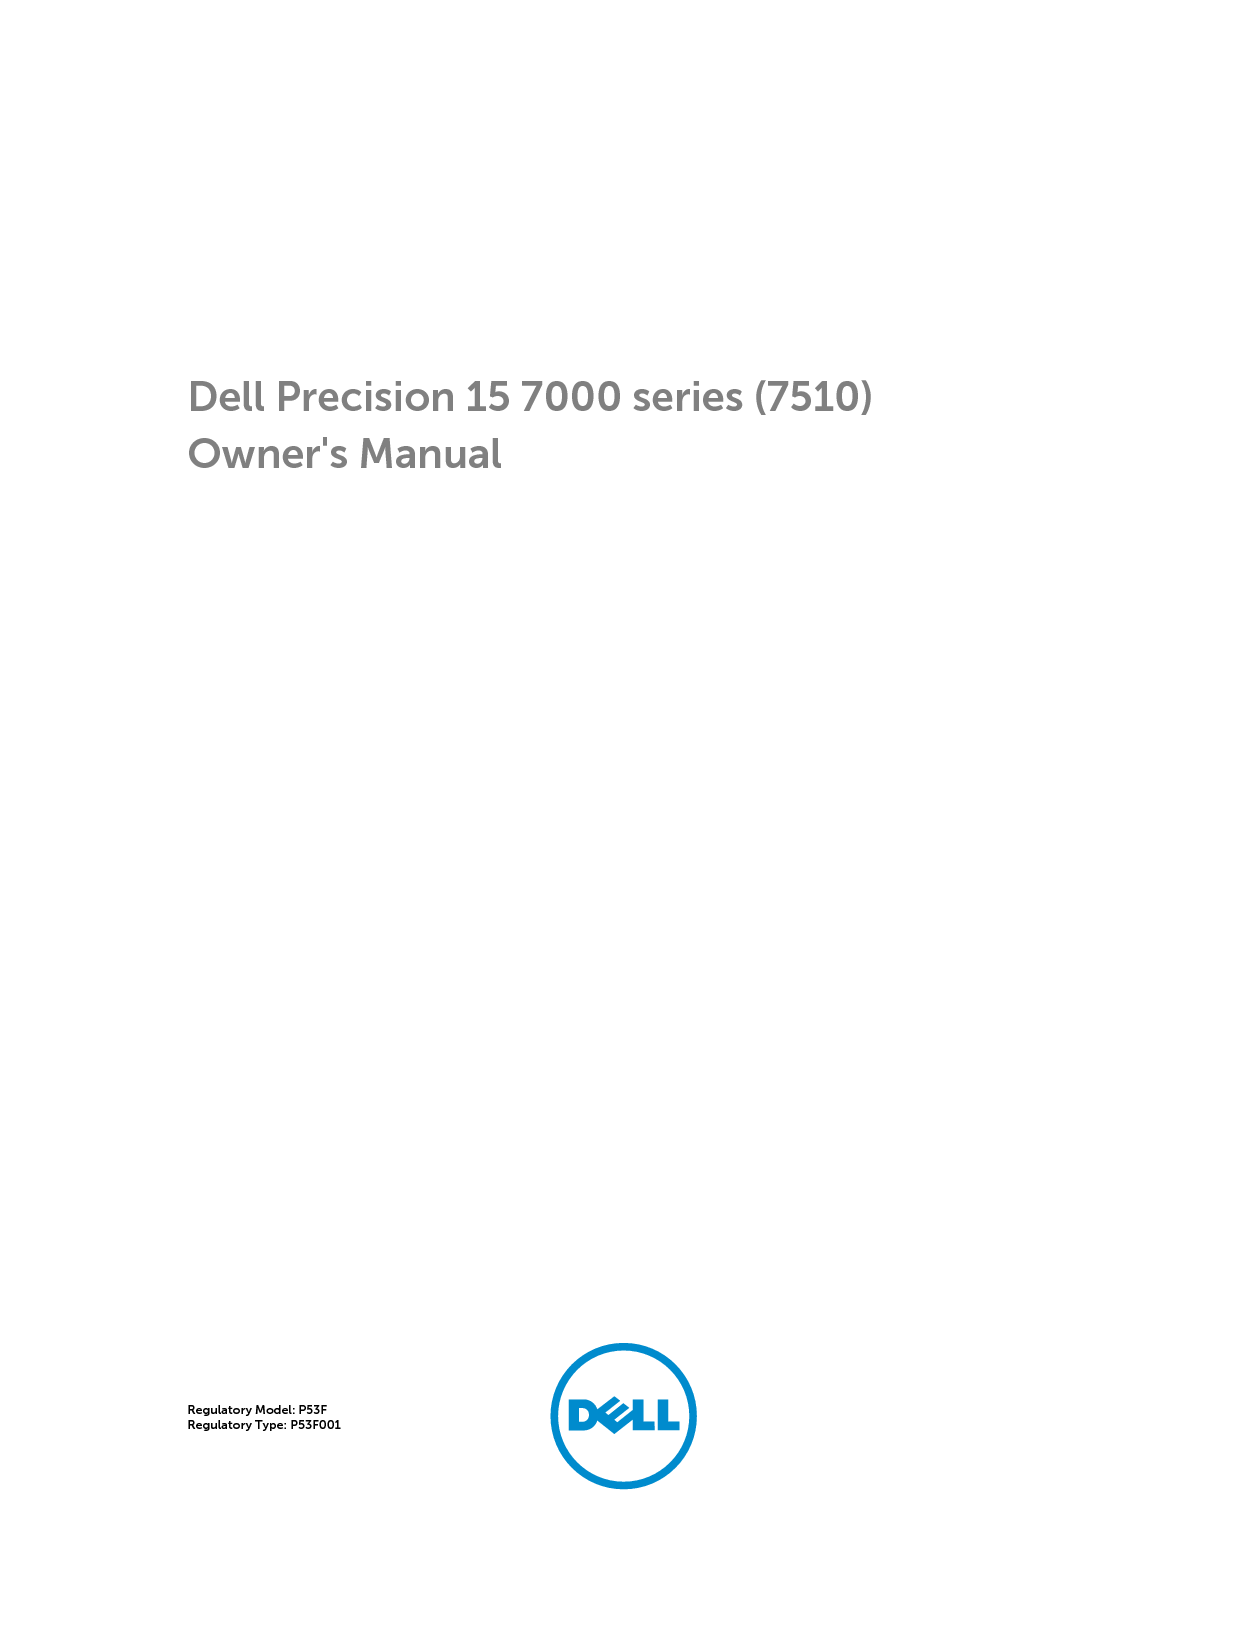 戴尔 Dell Precision 7510 用户手册 封面